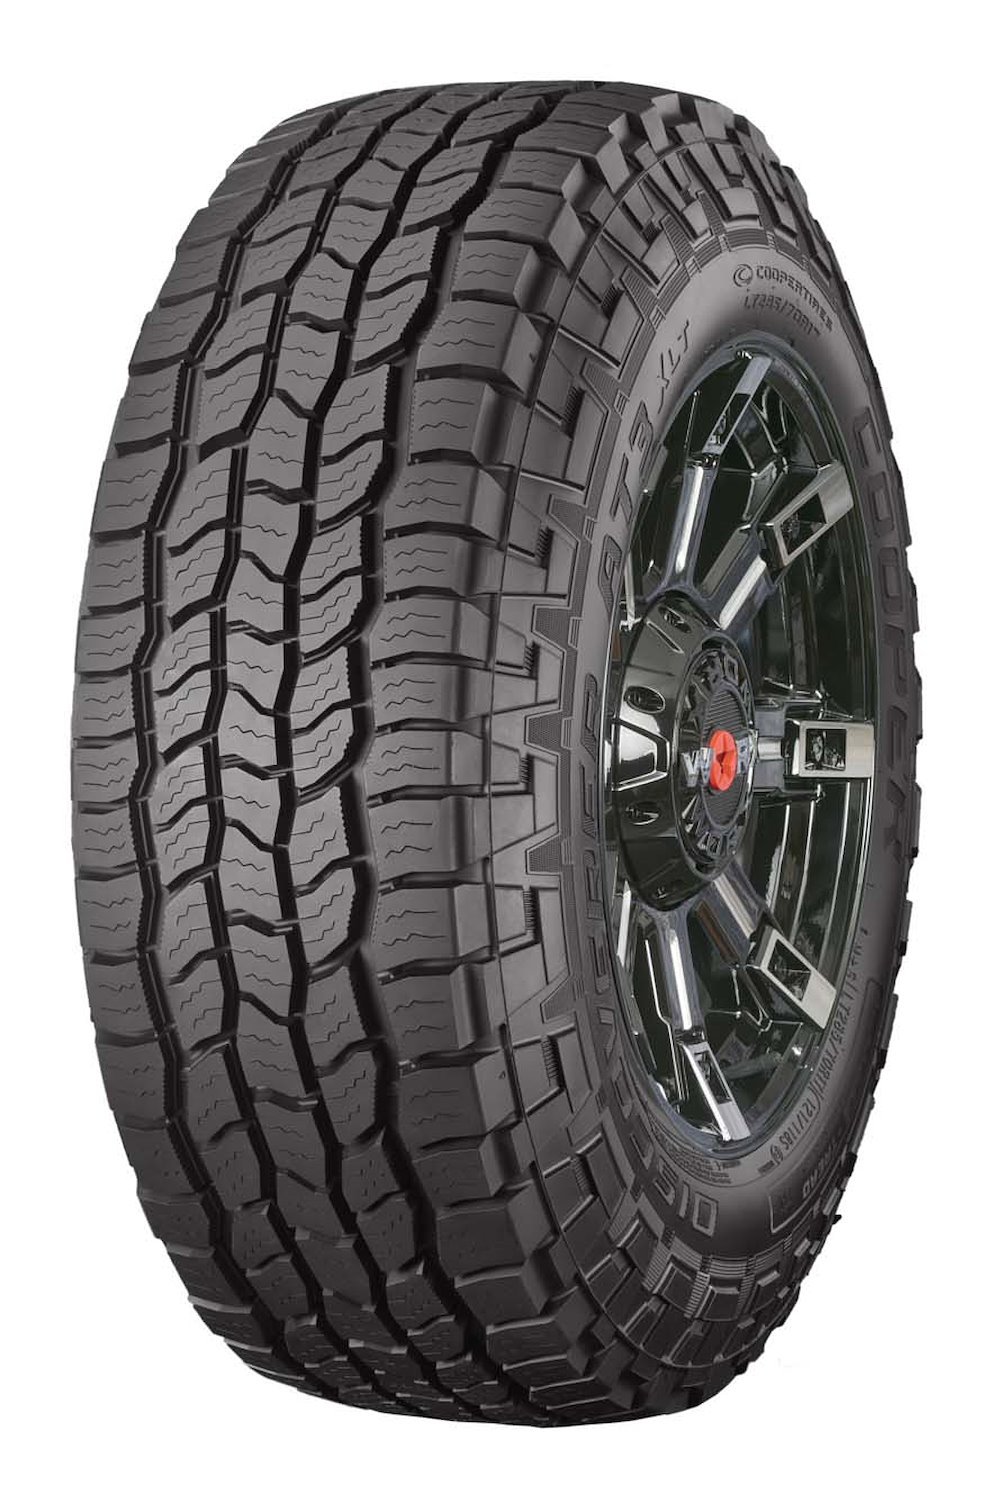 Discoverer AT3 XLT All-Terrain Tire, 35X12.50R20LT